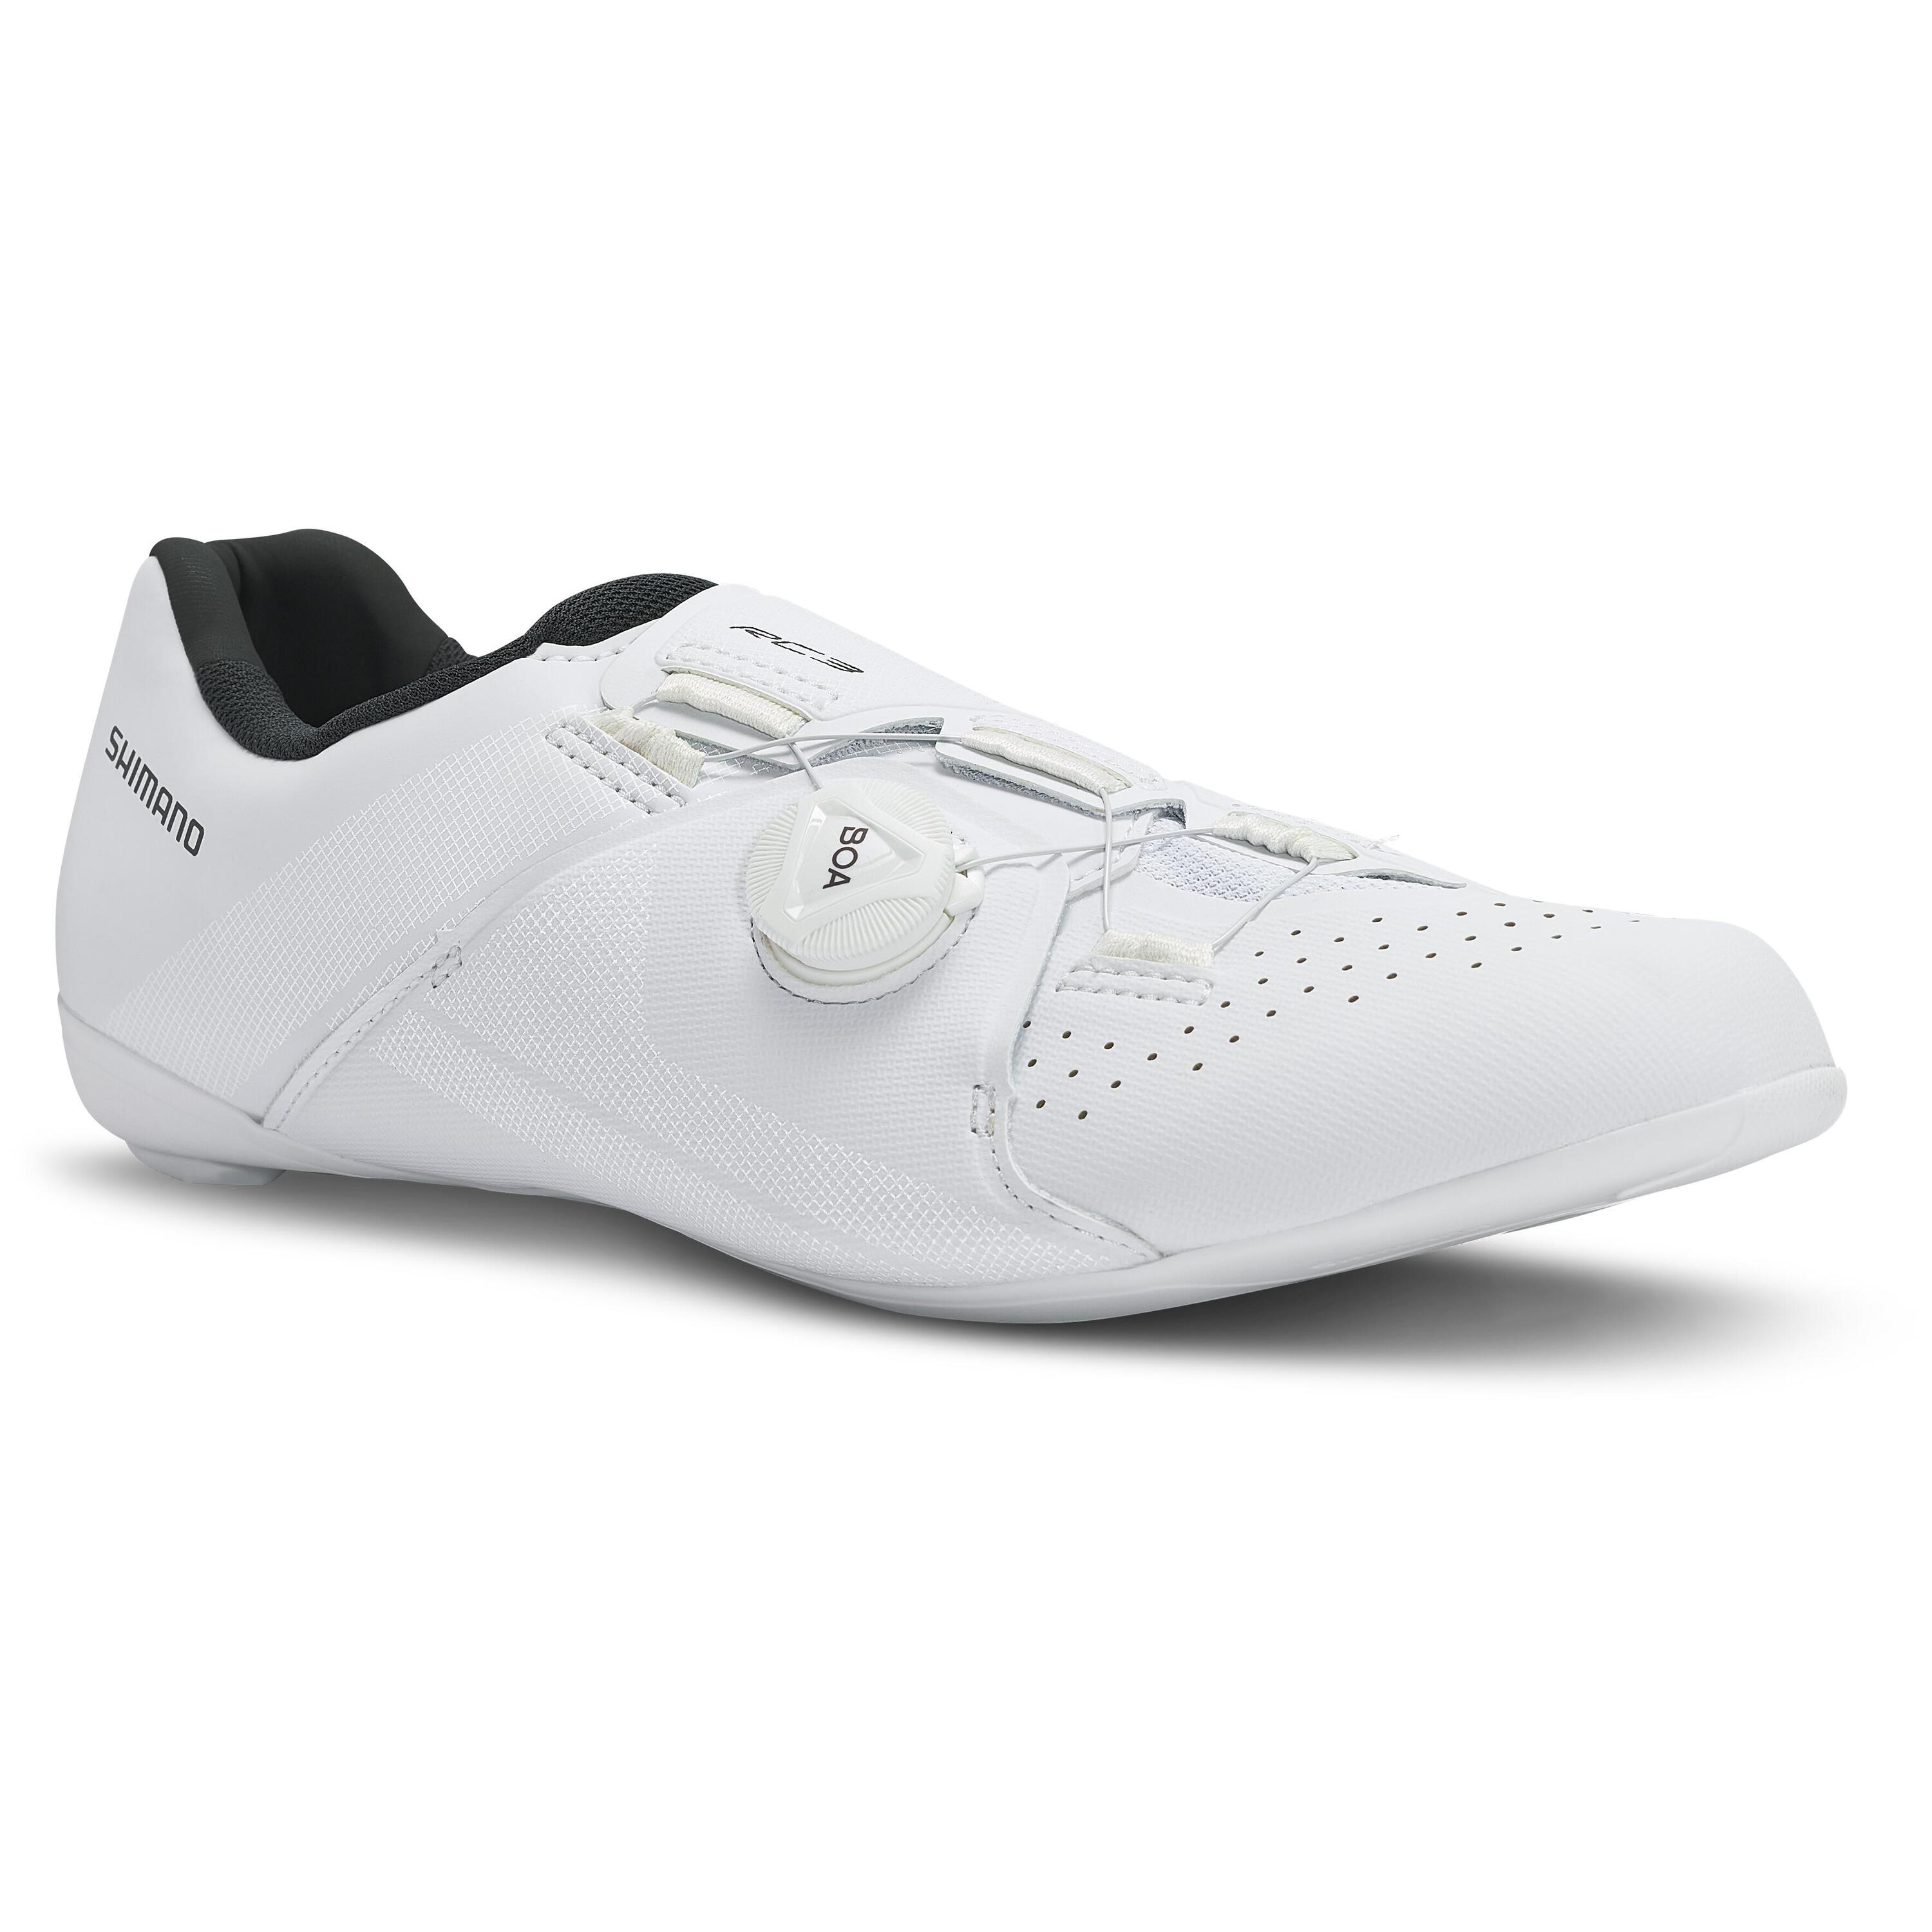 SHIMANO Road Cycling Shoes RC3 - White